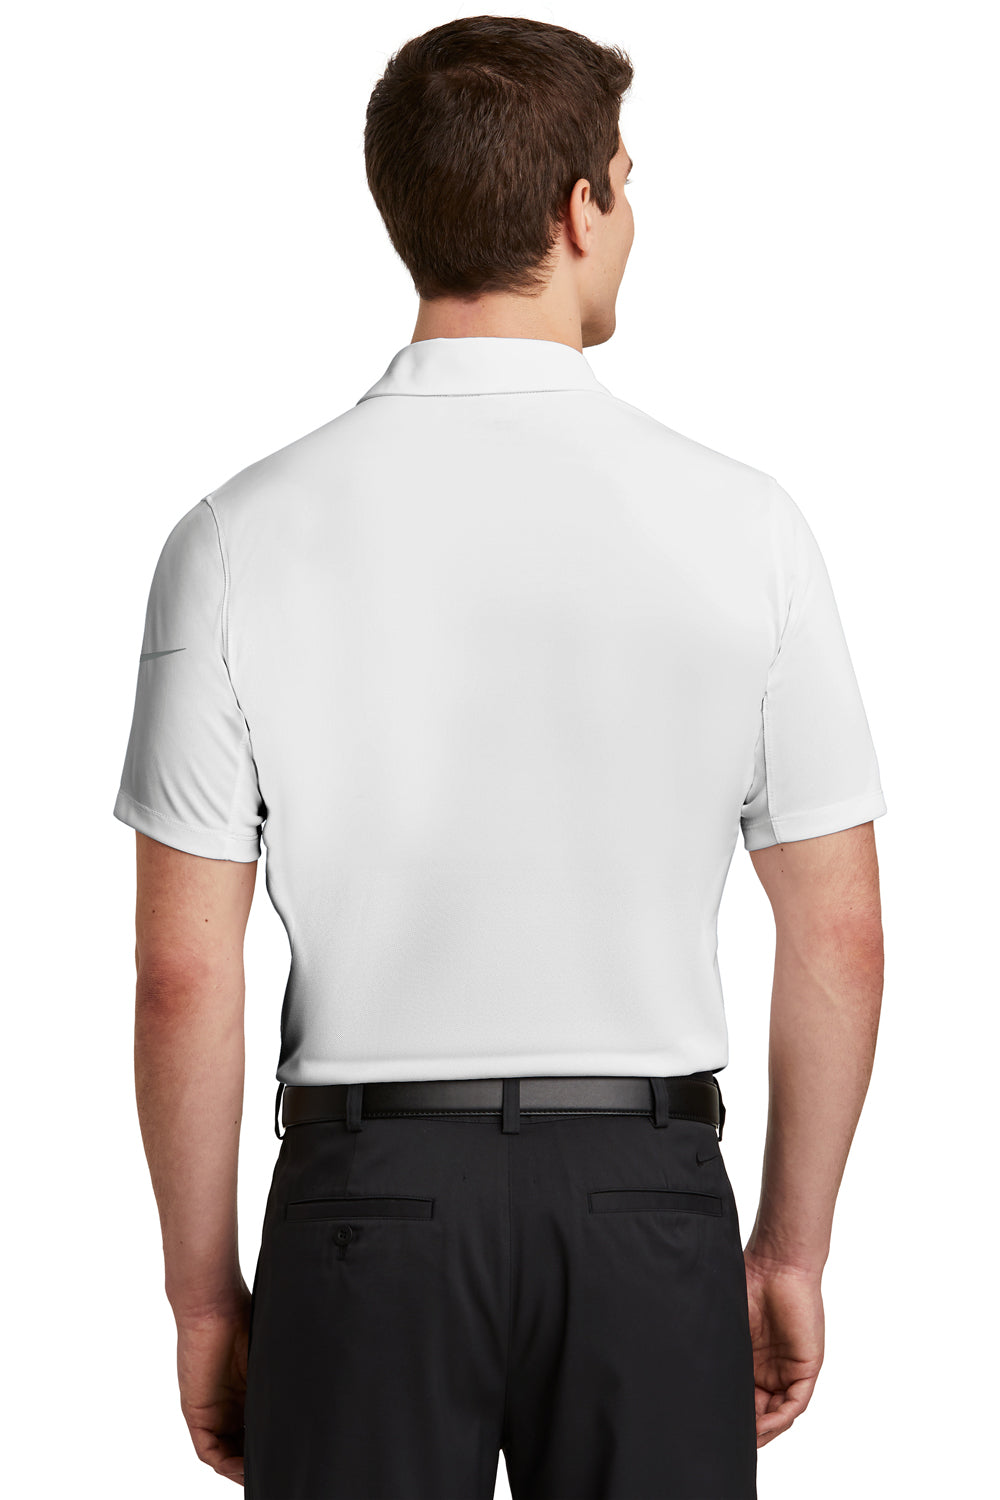 Nike NKAA1855 Mens Dri-Fit Moisture Wicking Short Sleeve Polo Shirt White Back